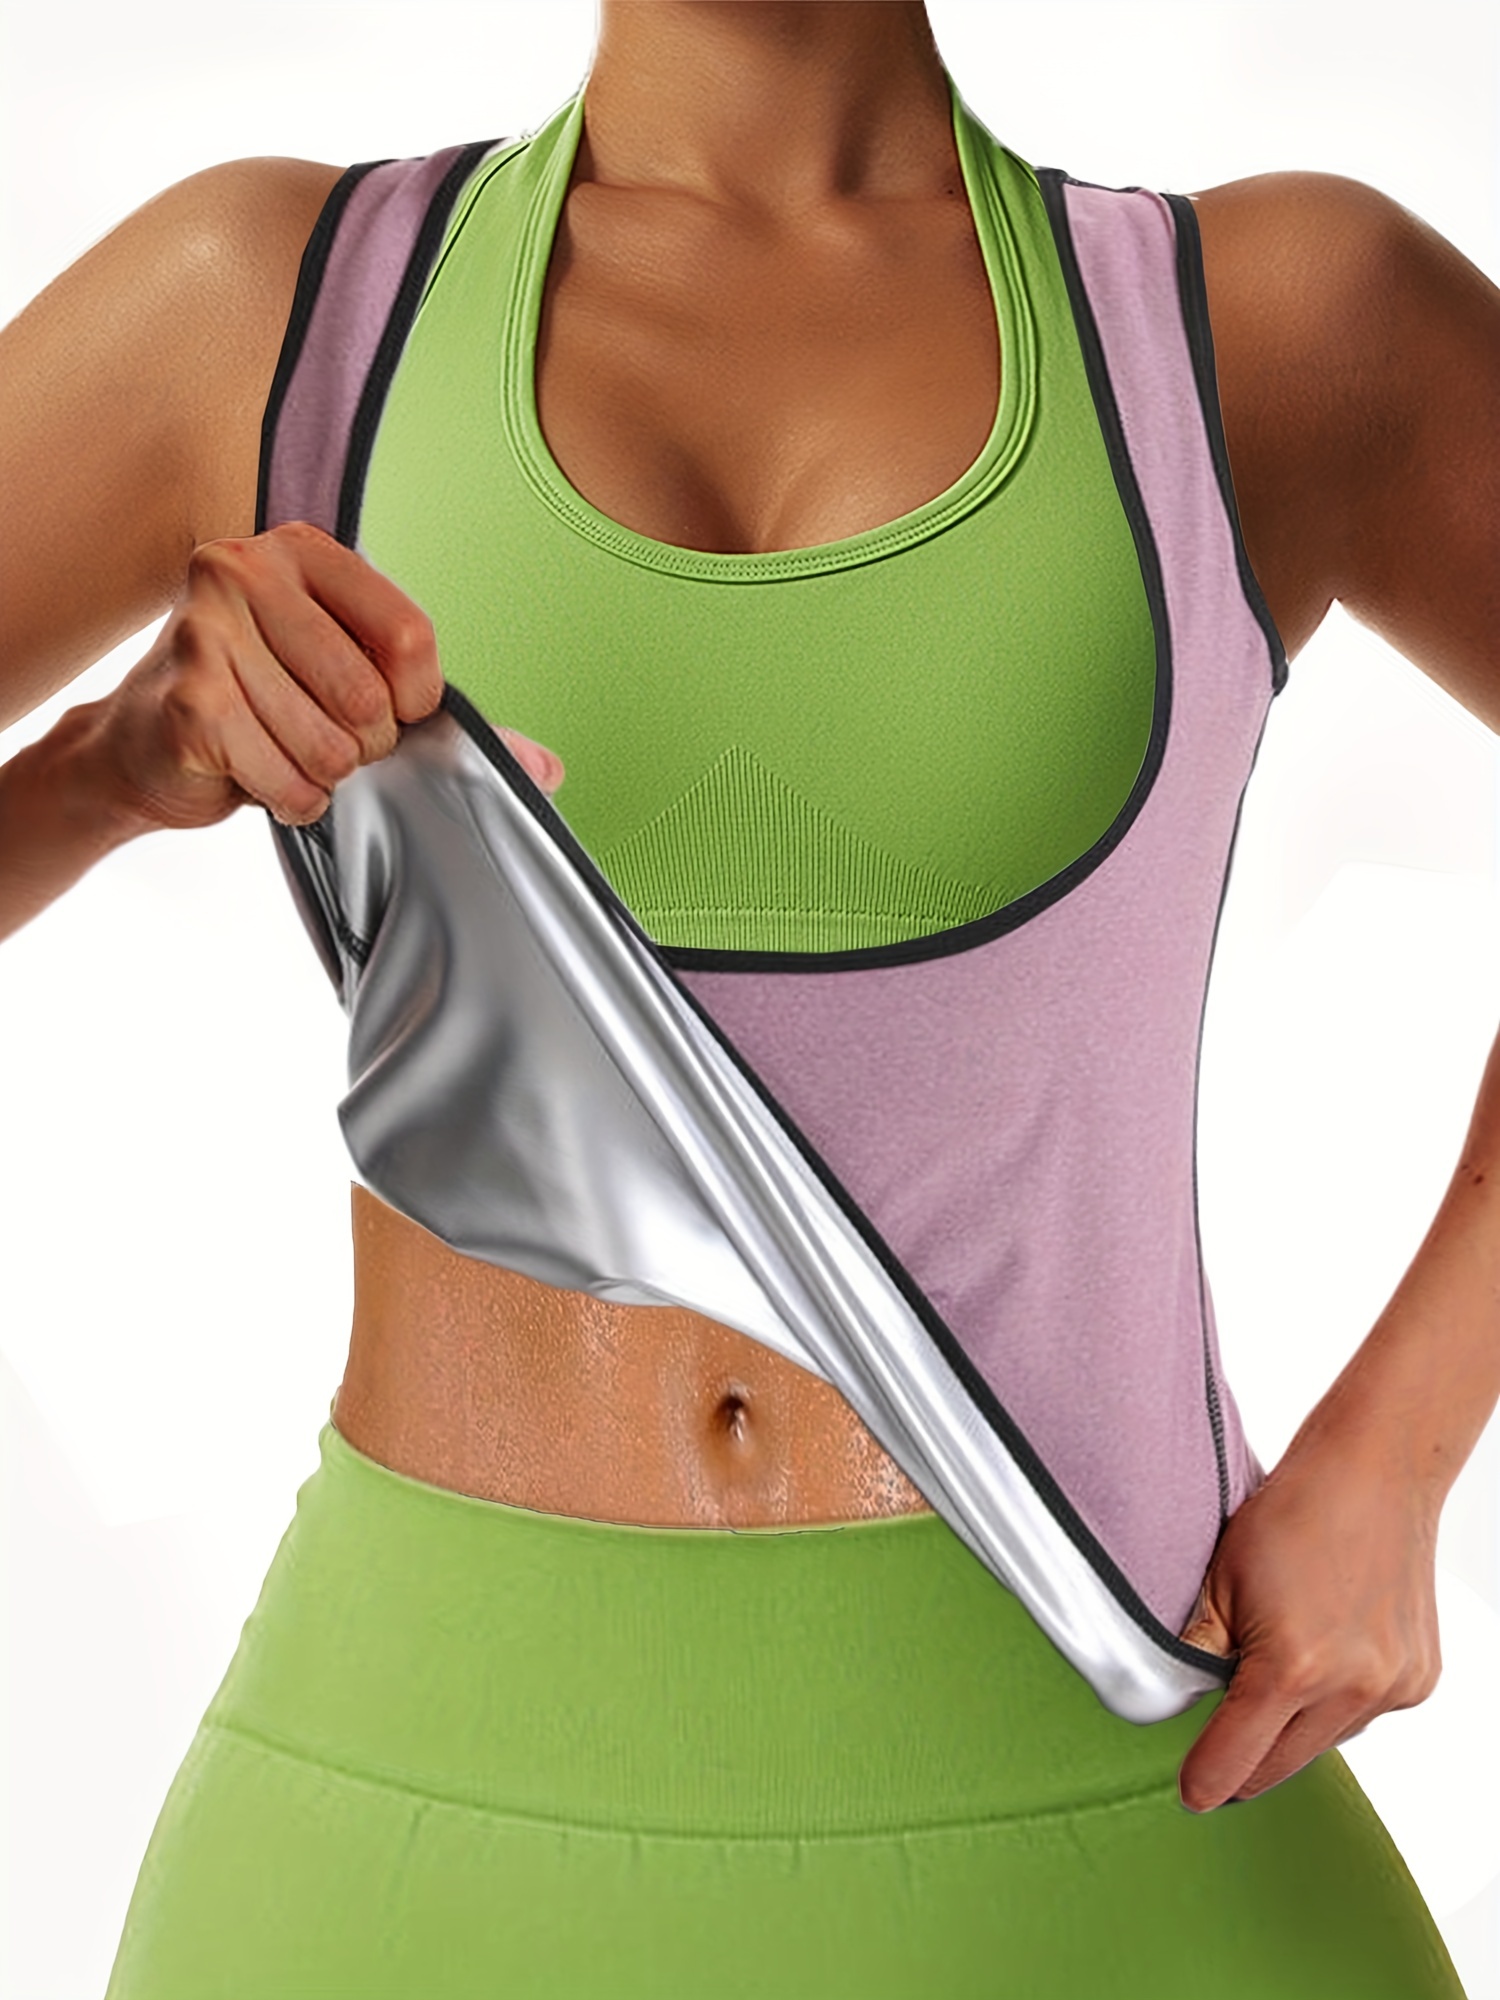  NonEcho Women Sauna Body Shaper Sweat Suit Sleeve Spa Cami Hot  Neoprene Slimming Workout Vest Waist Trainer Top : Sports & Outdoors